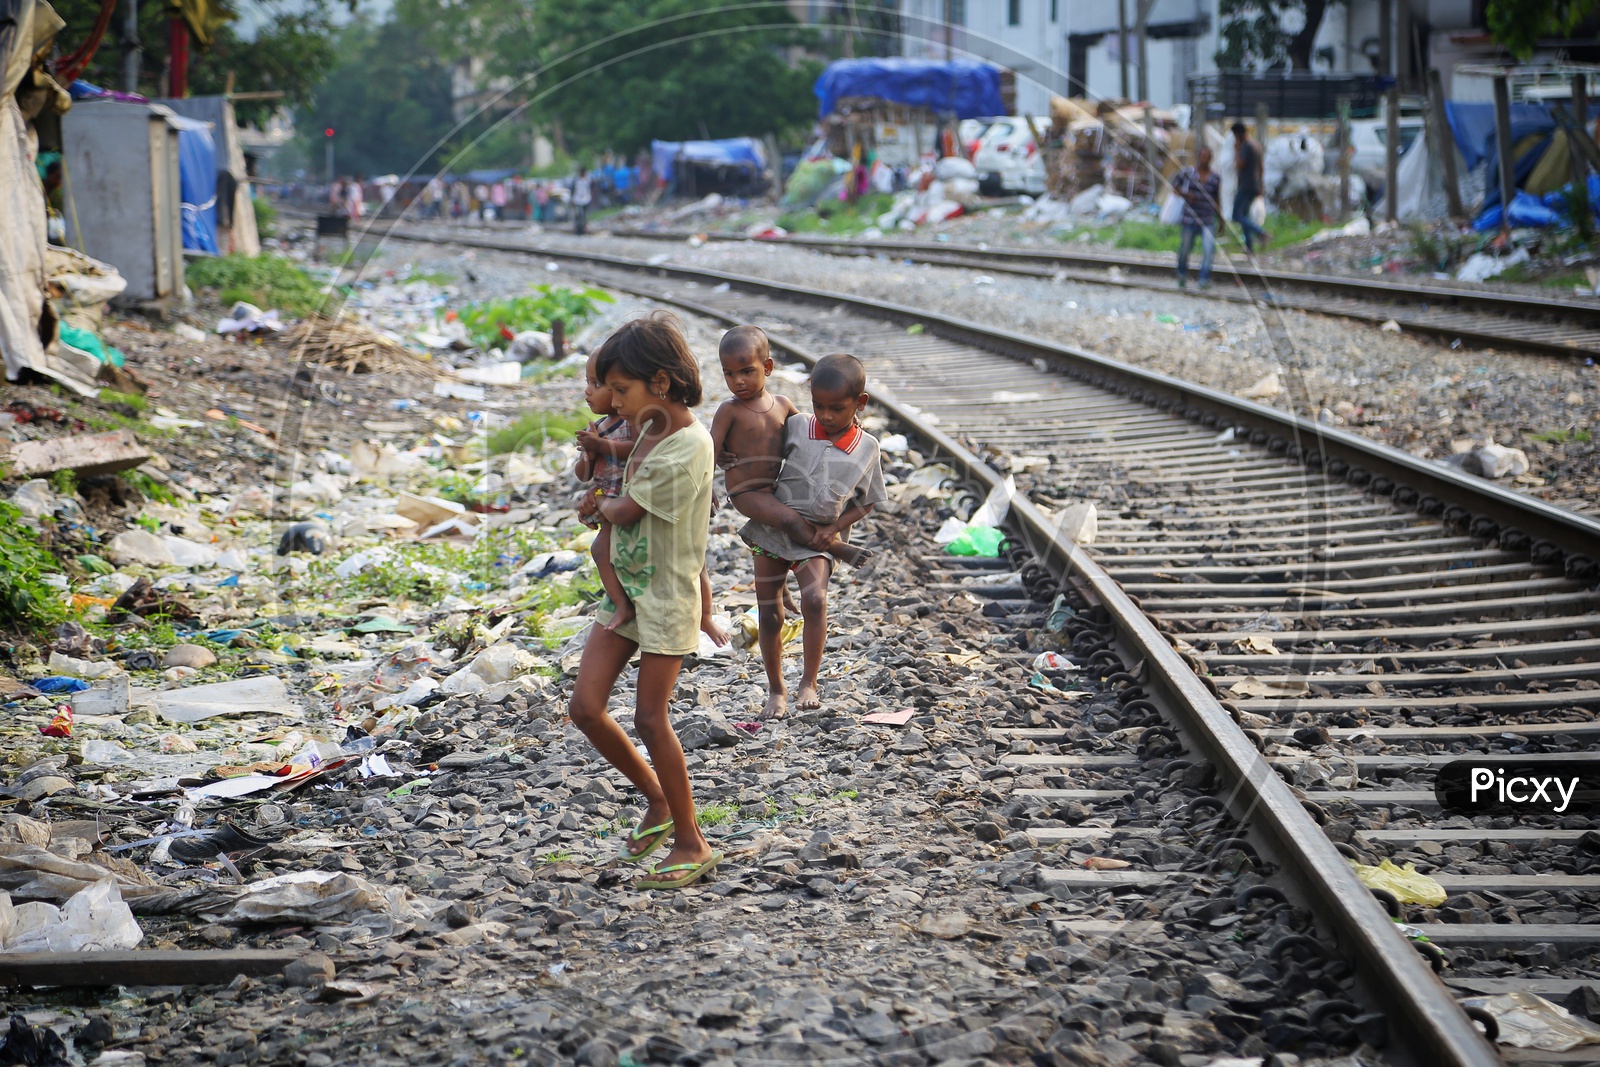 Kids  Or Children In Indian Slum Areas